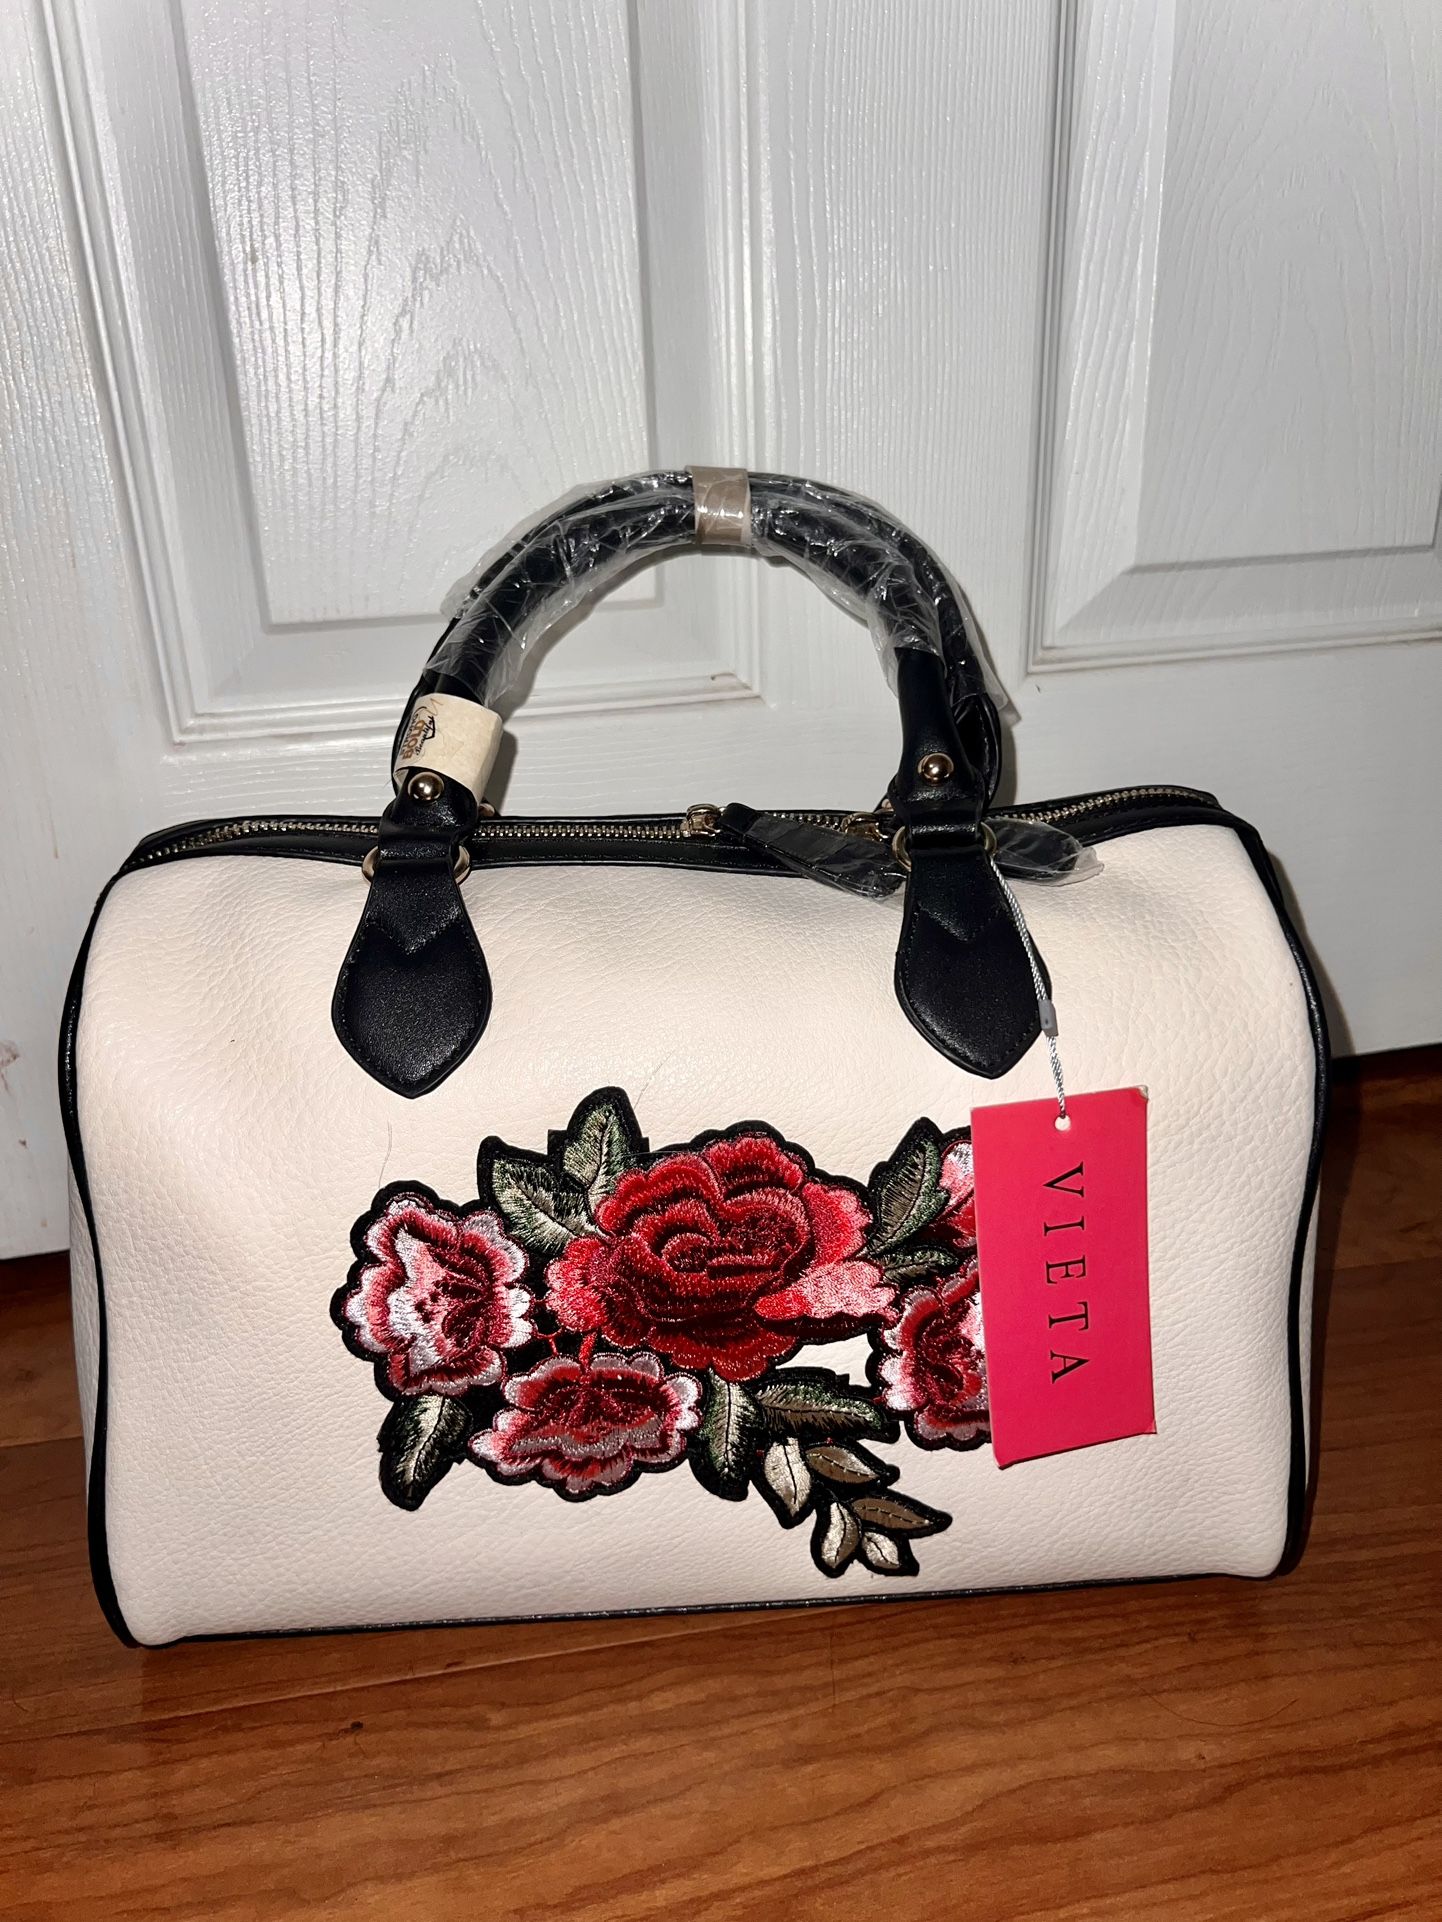 Off White, Rose Flower Bag/ Purse Brand New